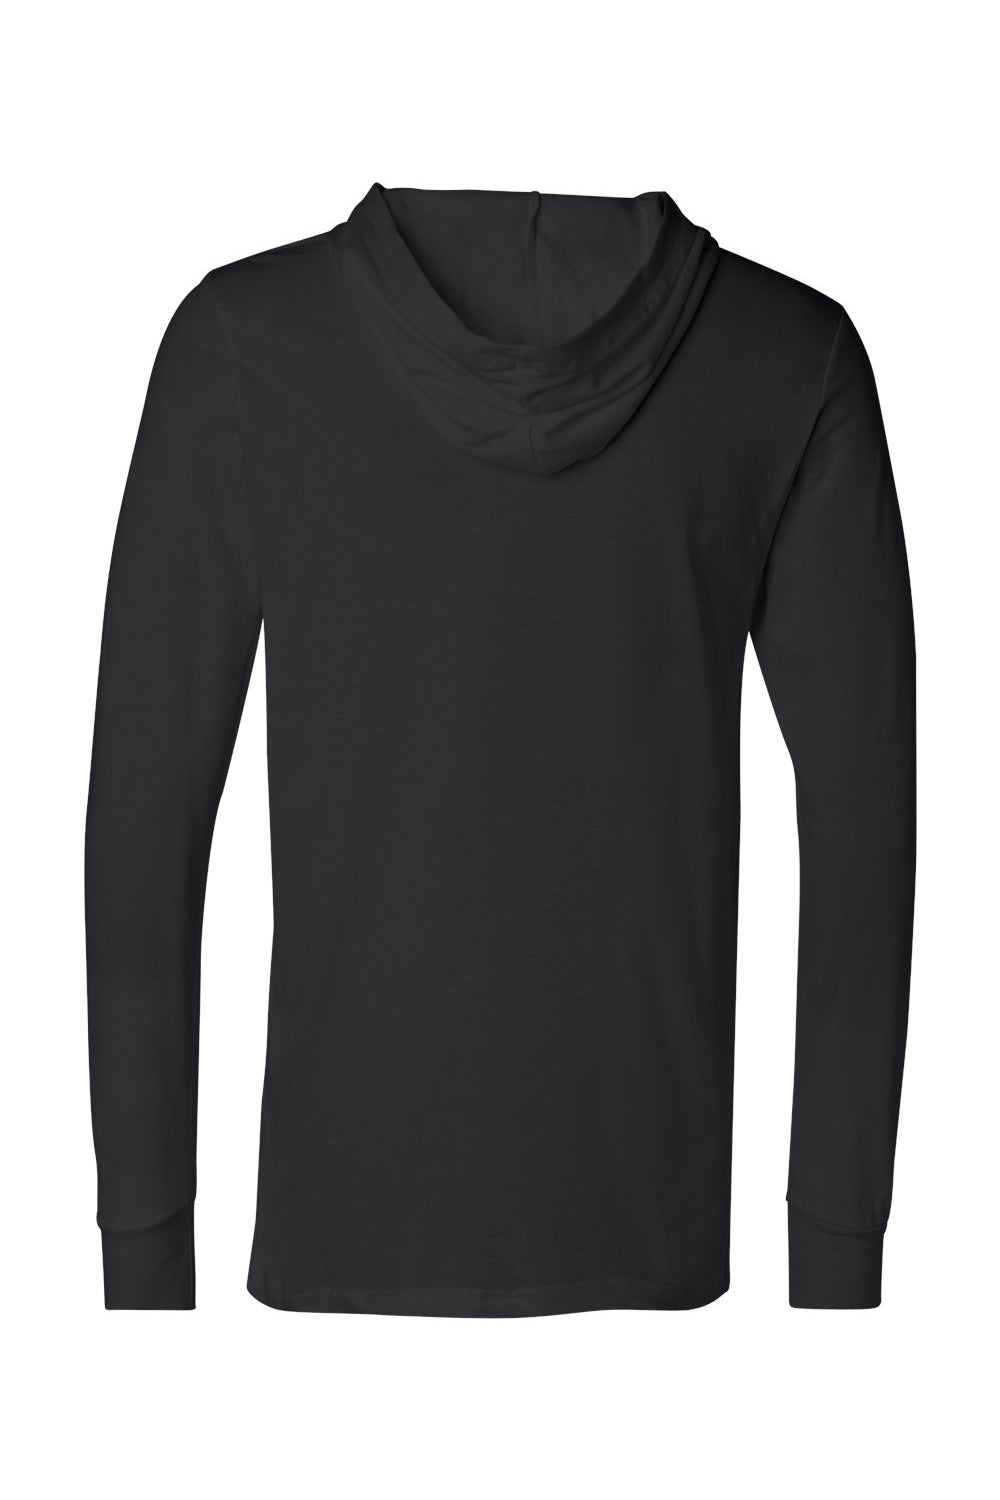 Bella + Canvas BC3512/3512 Mens Jersey Long Sleeve Hooded T-Shirt Hoodie Black Flat Back